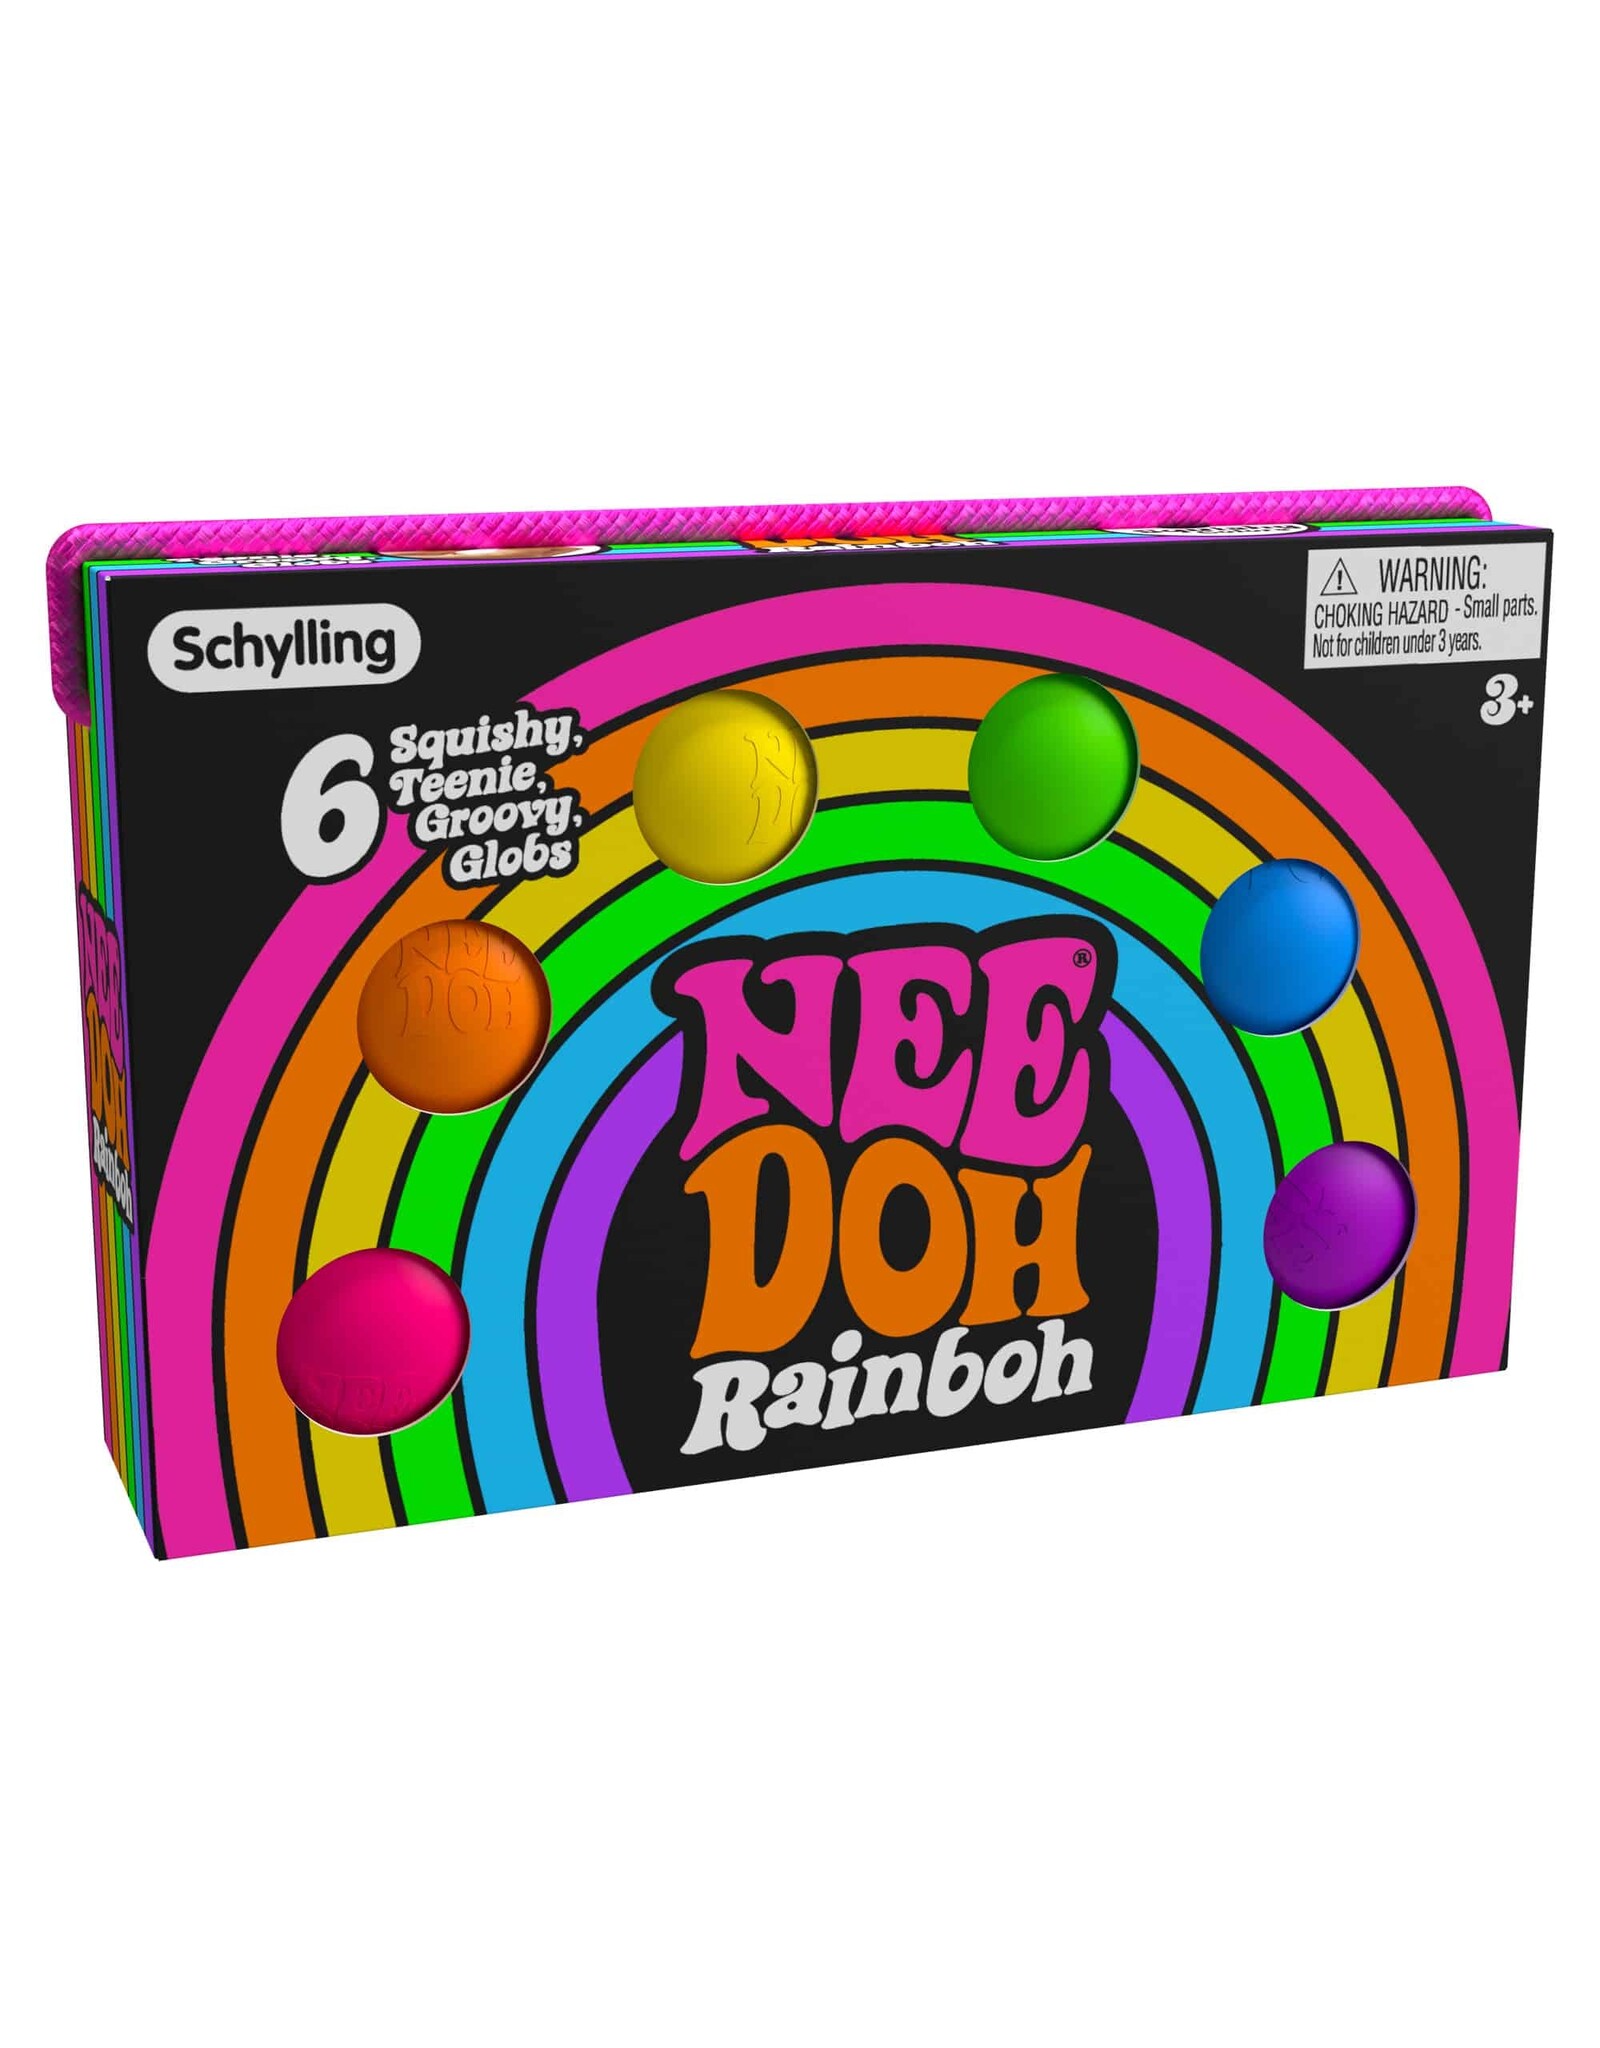 Schylling Rainbow Teenie NeeDoh